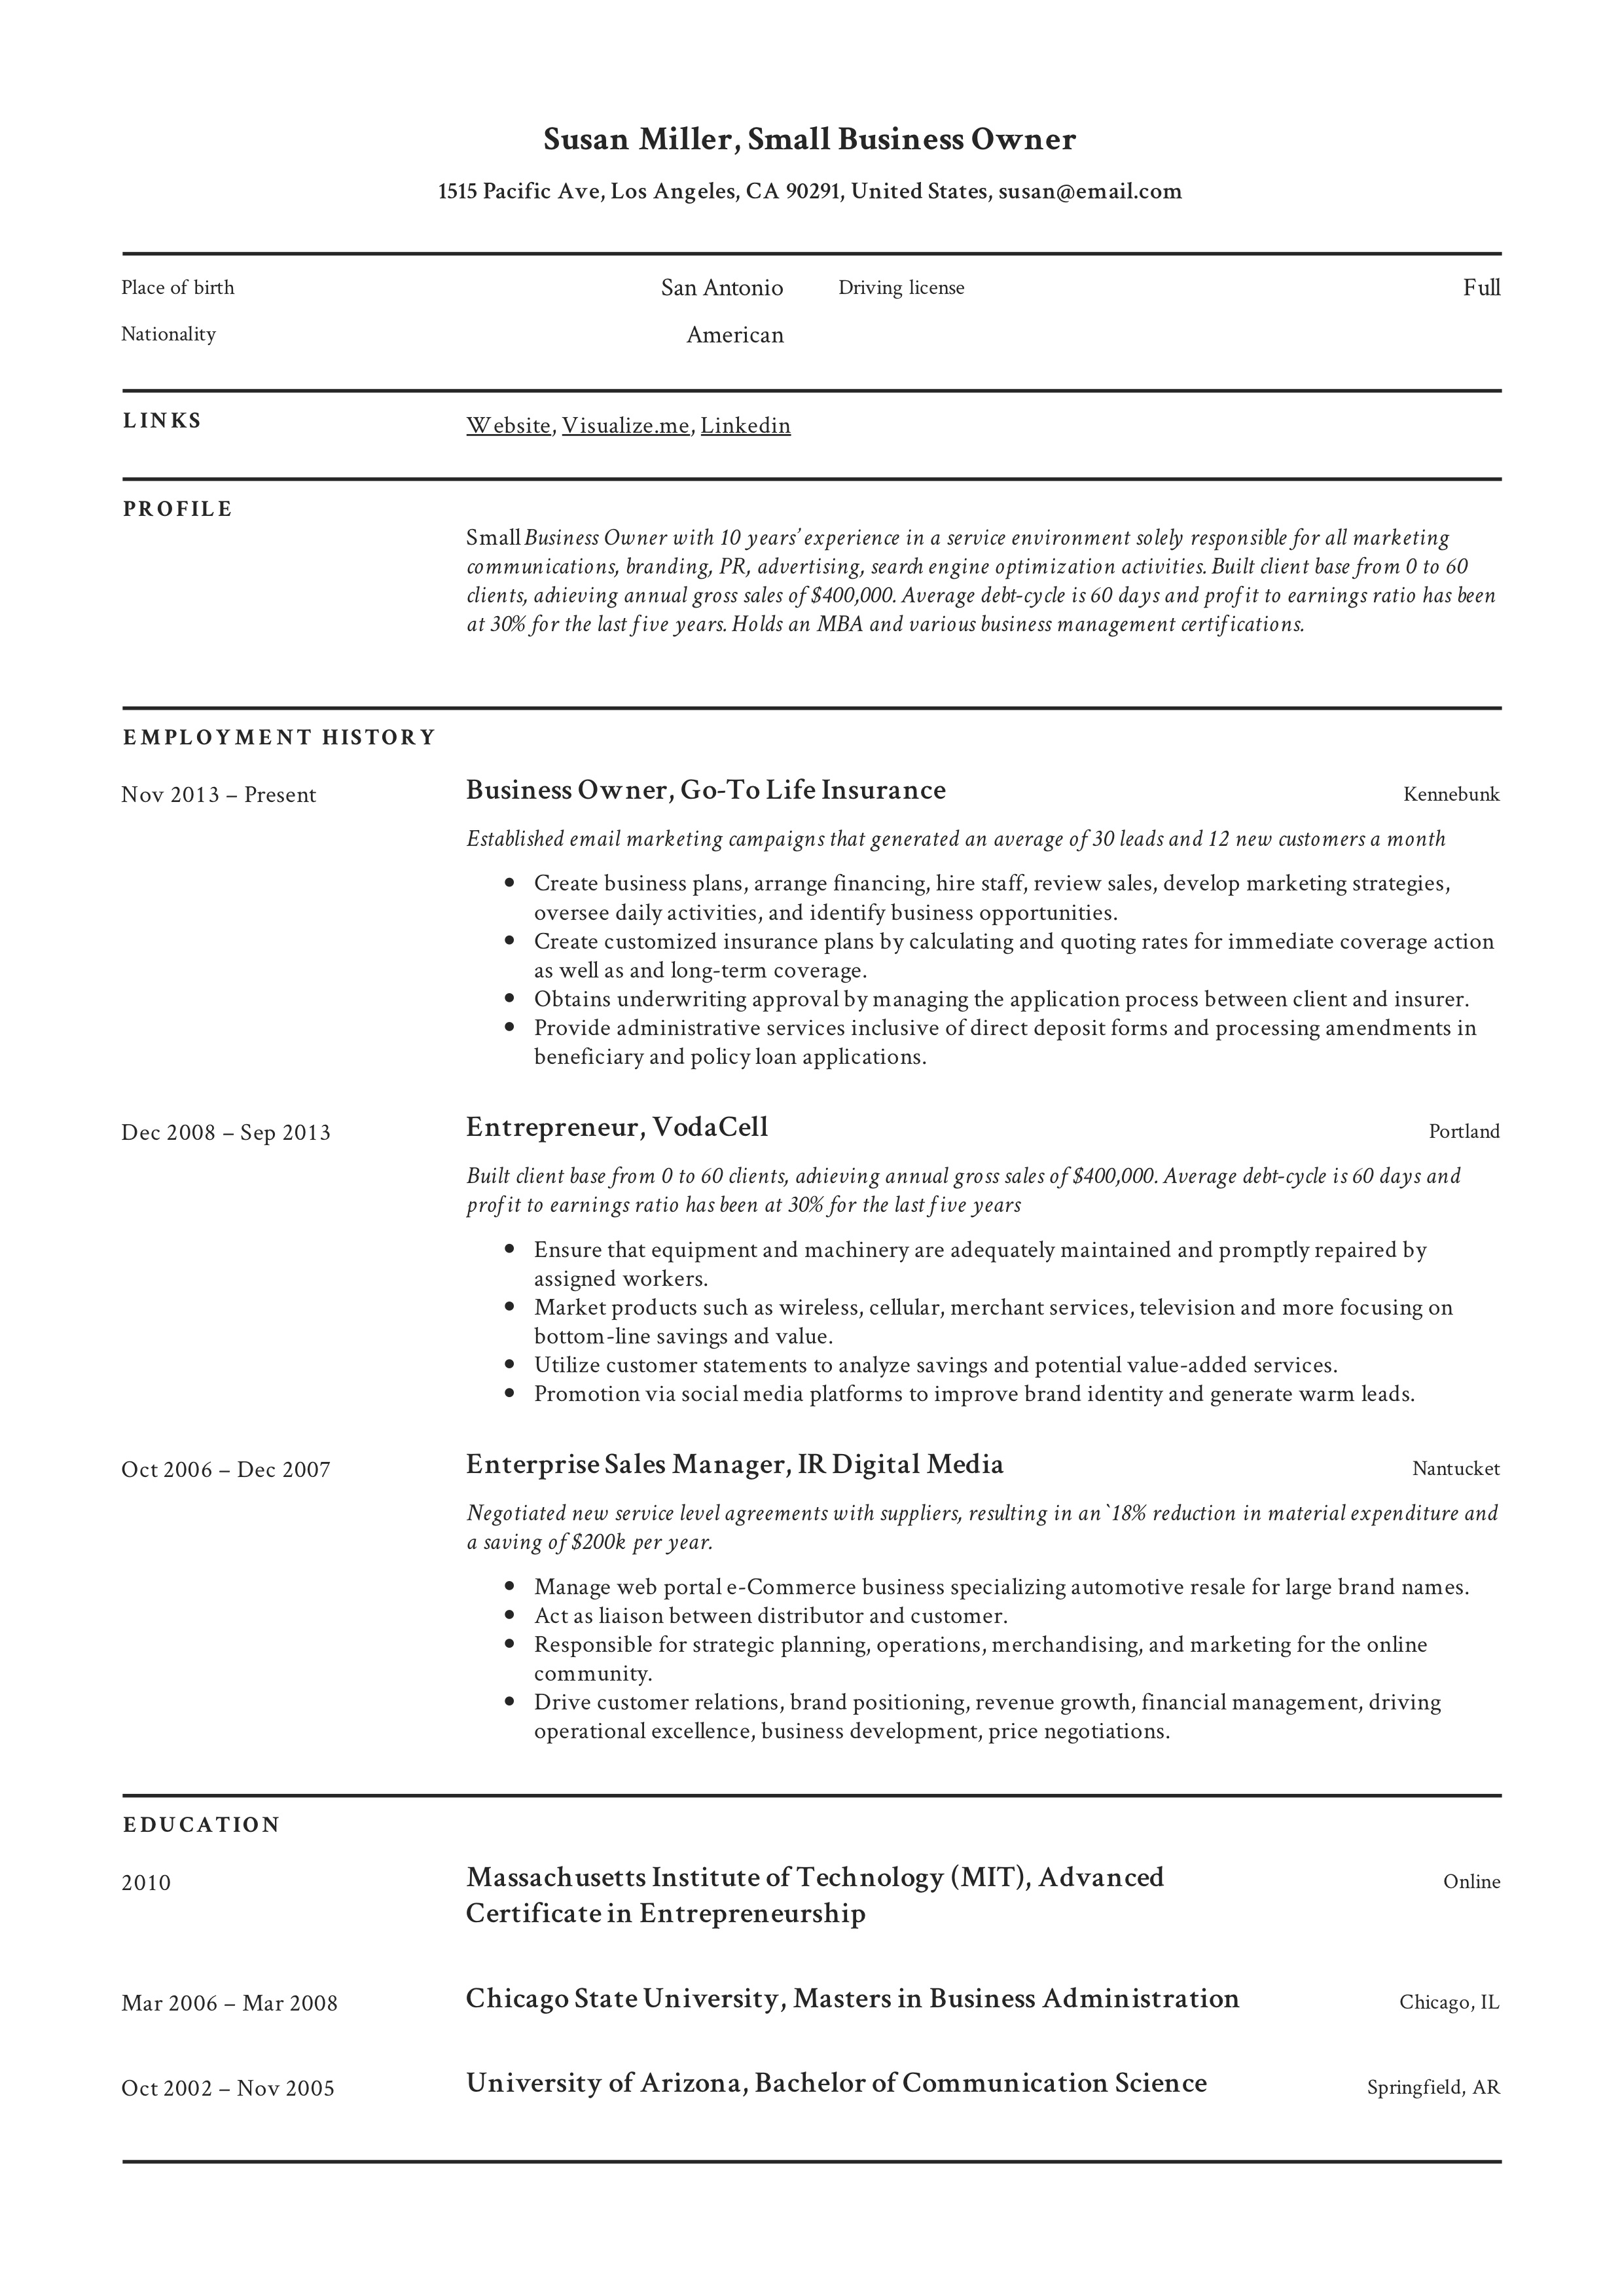 Custom resume writing custom writing co uk